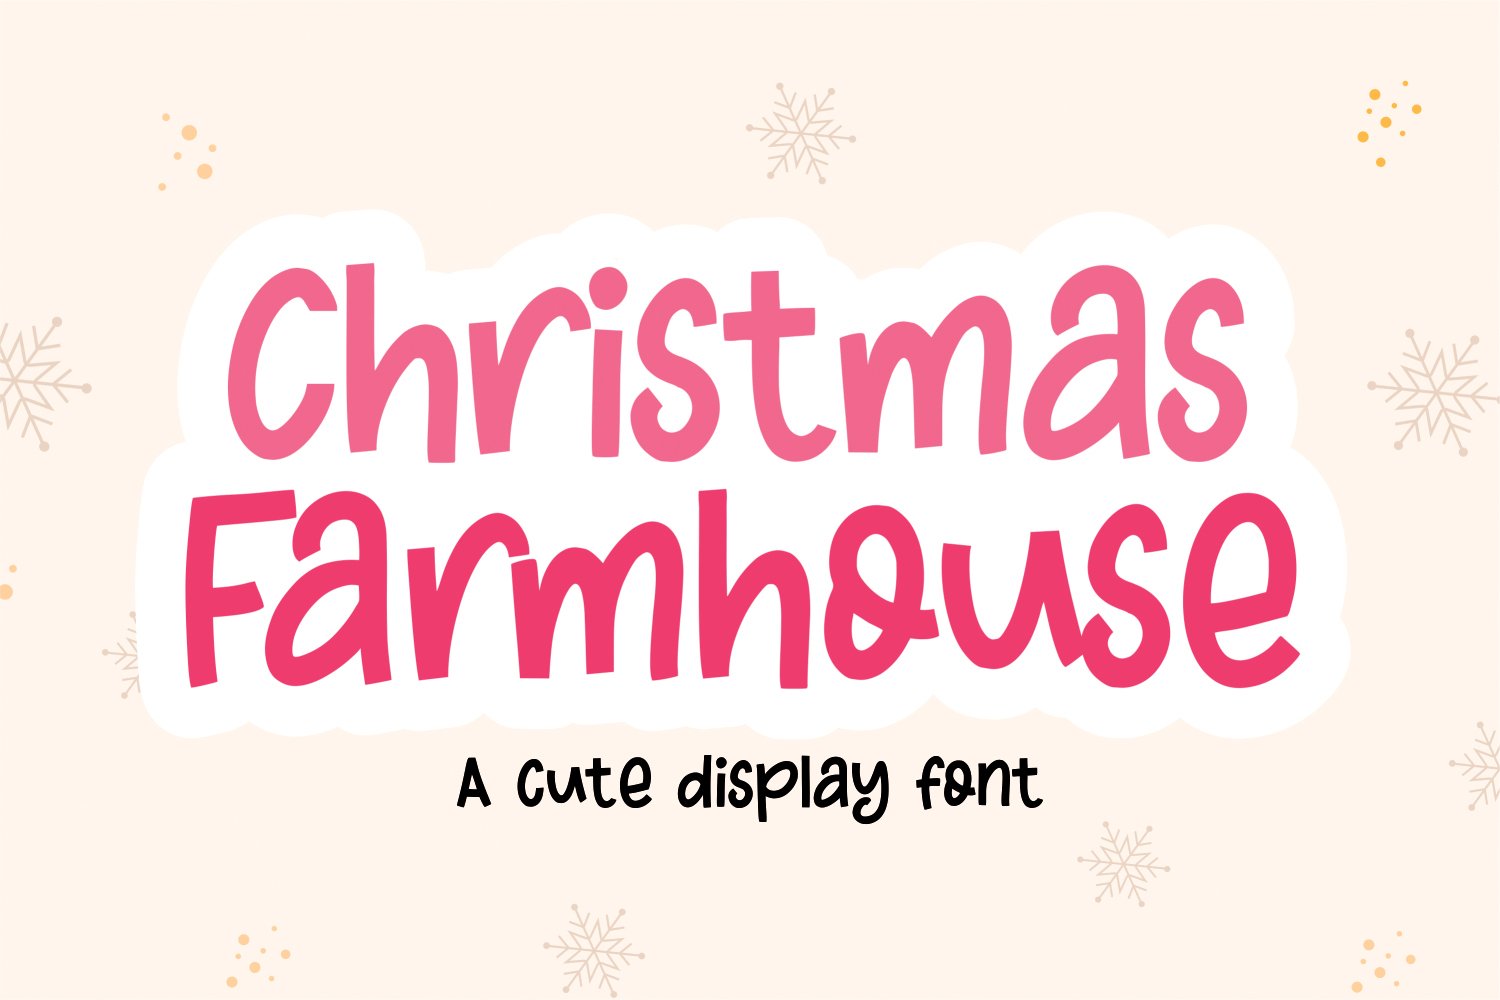 Christmas Farmhouse cover image.